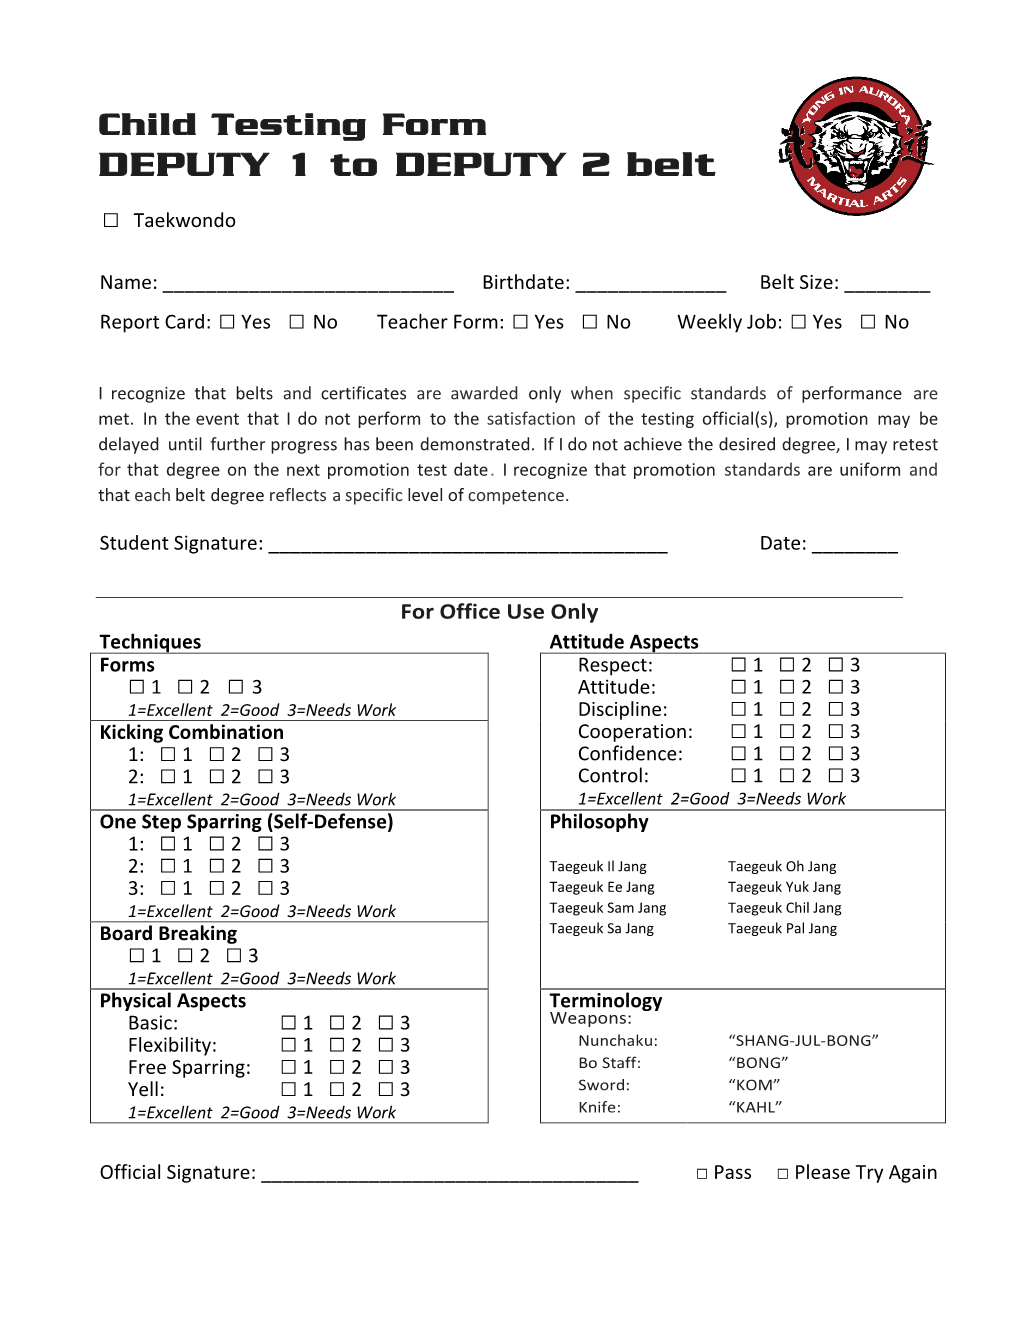 Child Testing Form DEPUTY 1 to DEPUTY 2 Belt